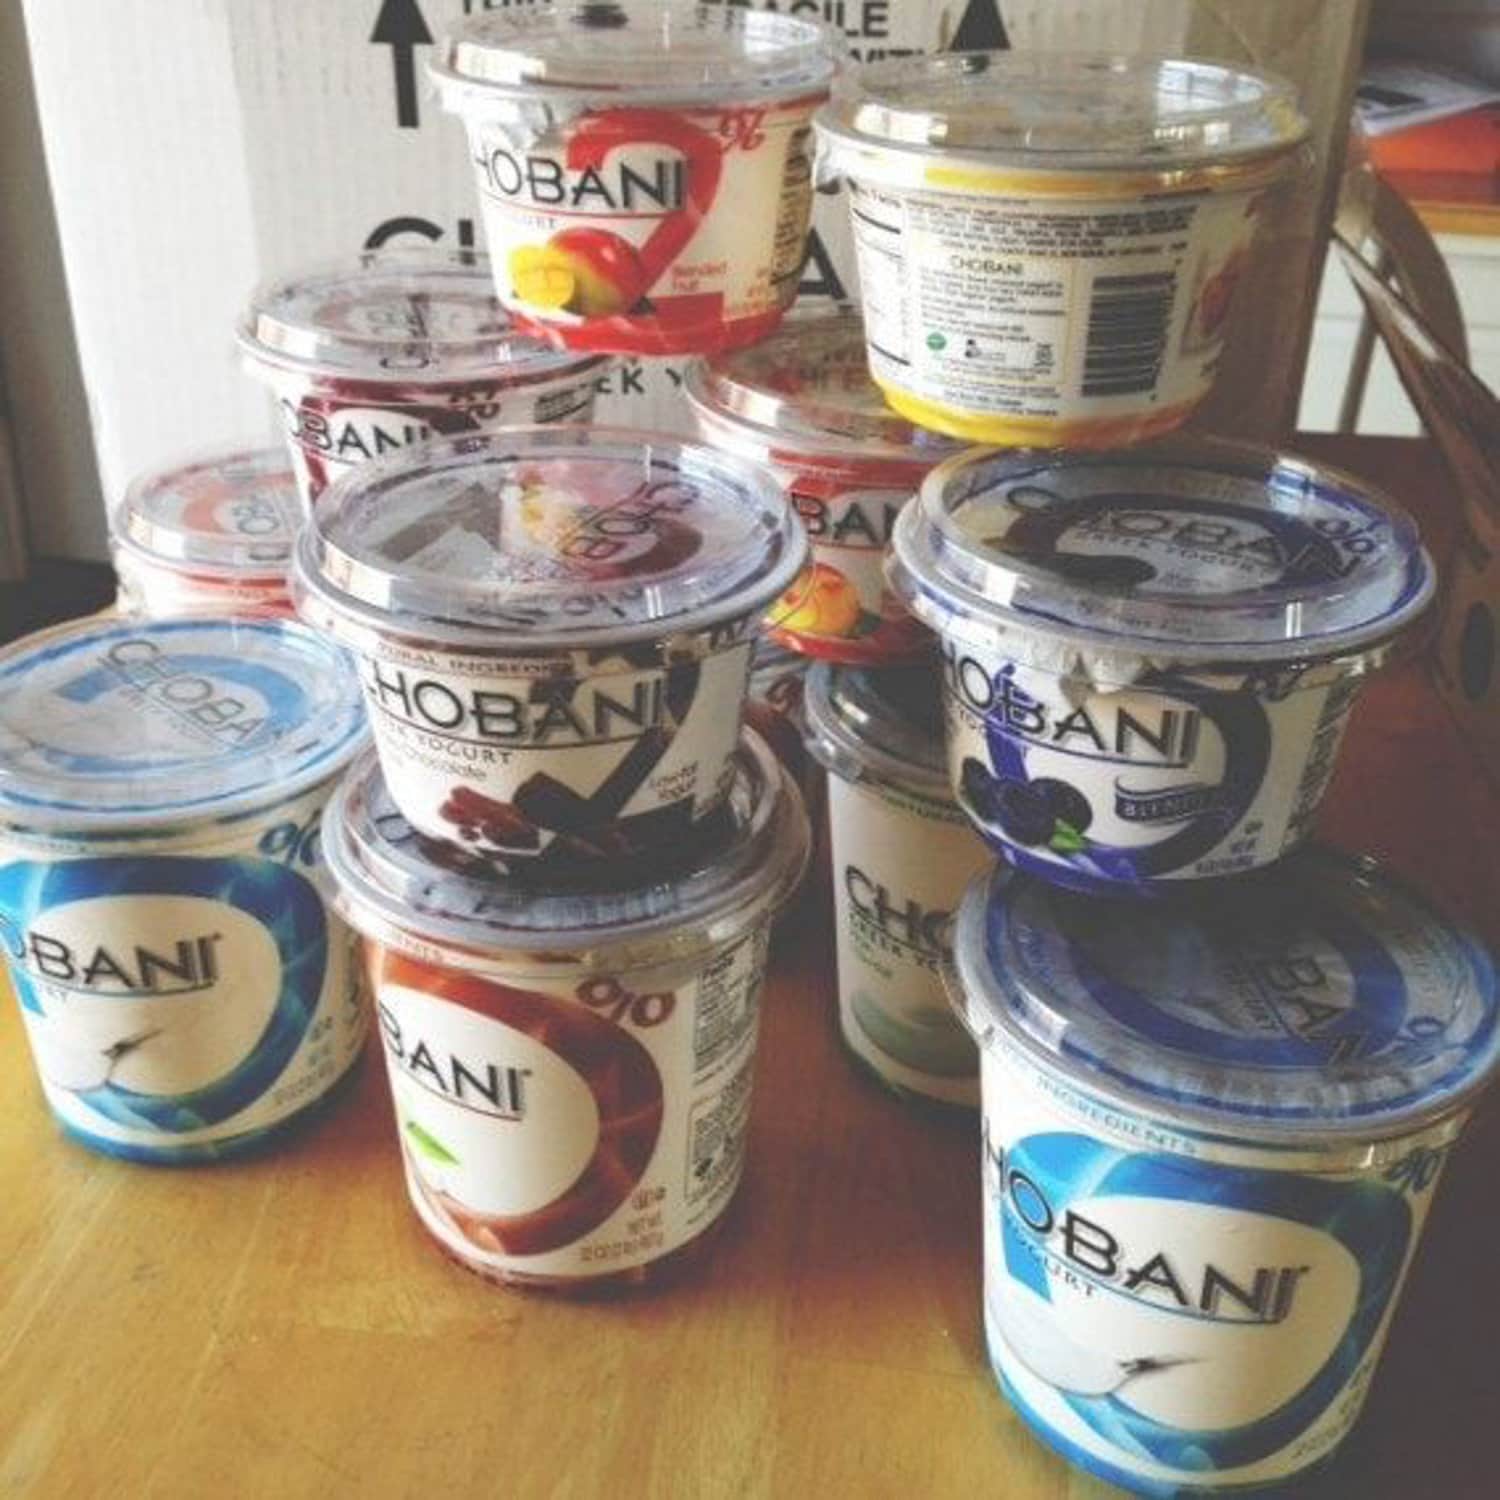 Chobani yogurts stacked on top of each other